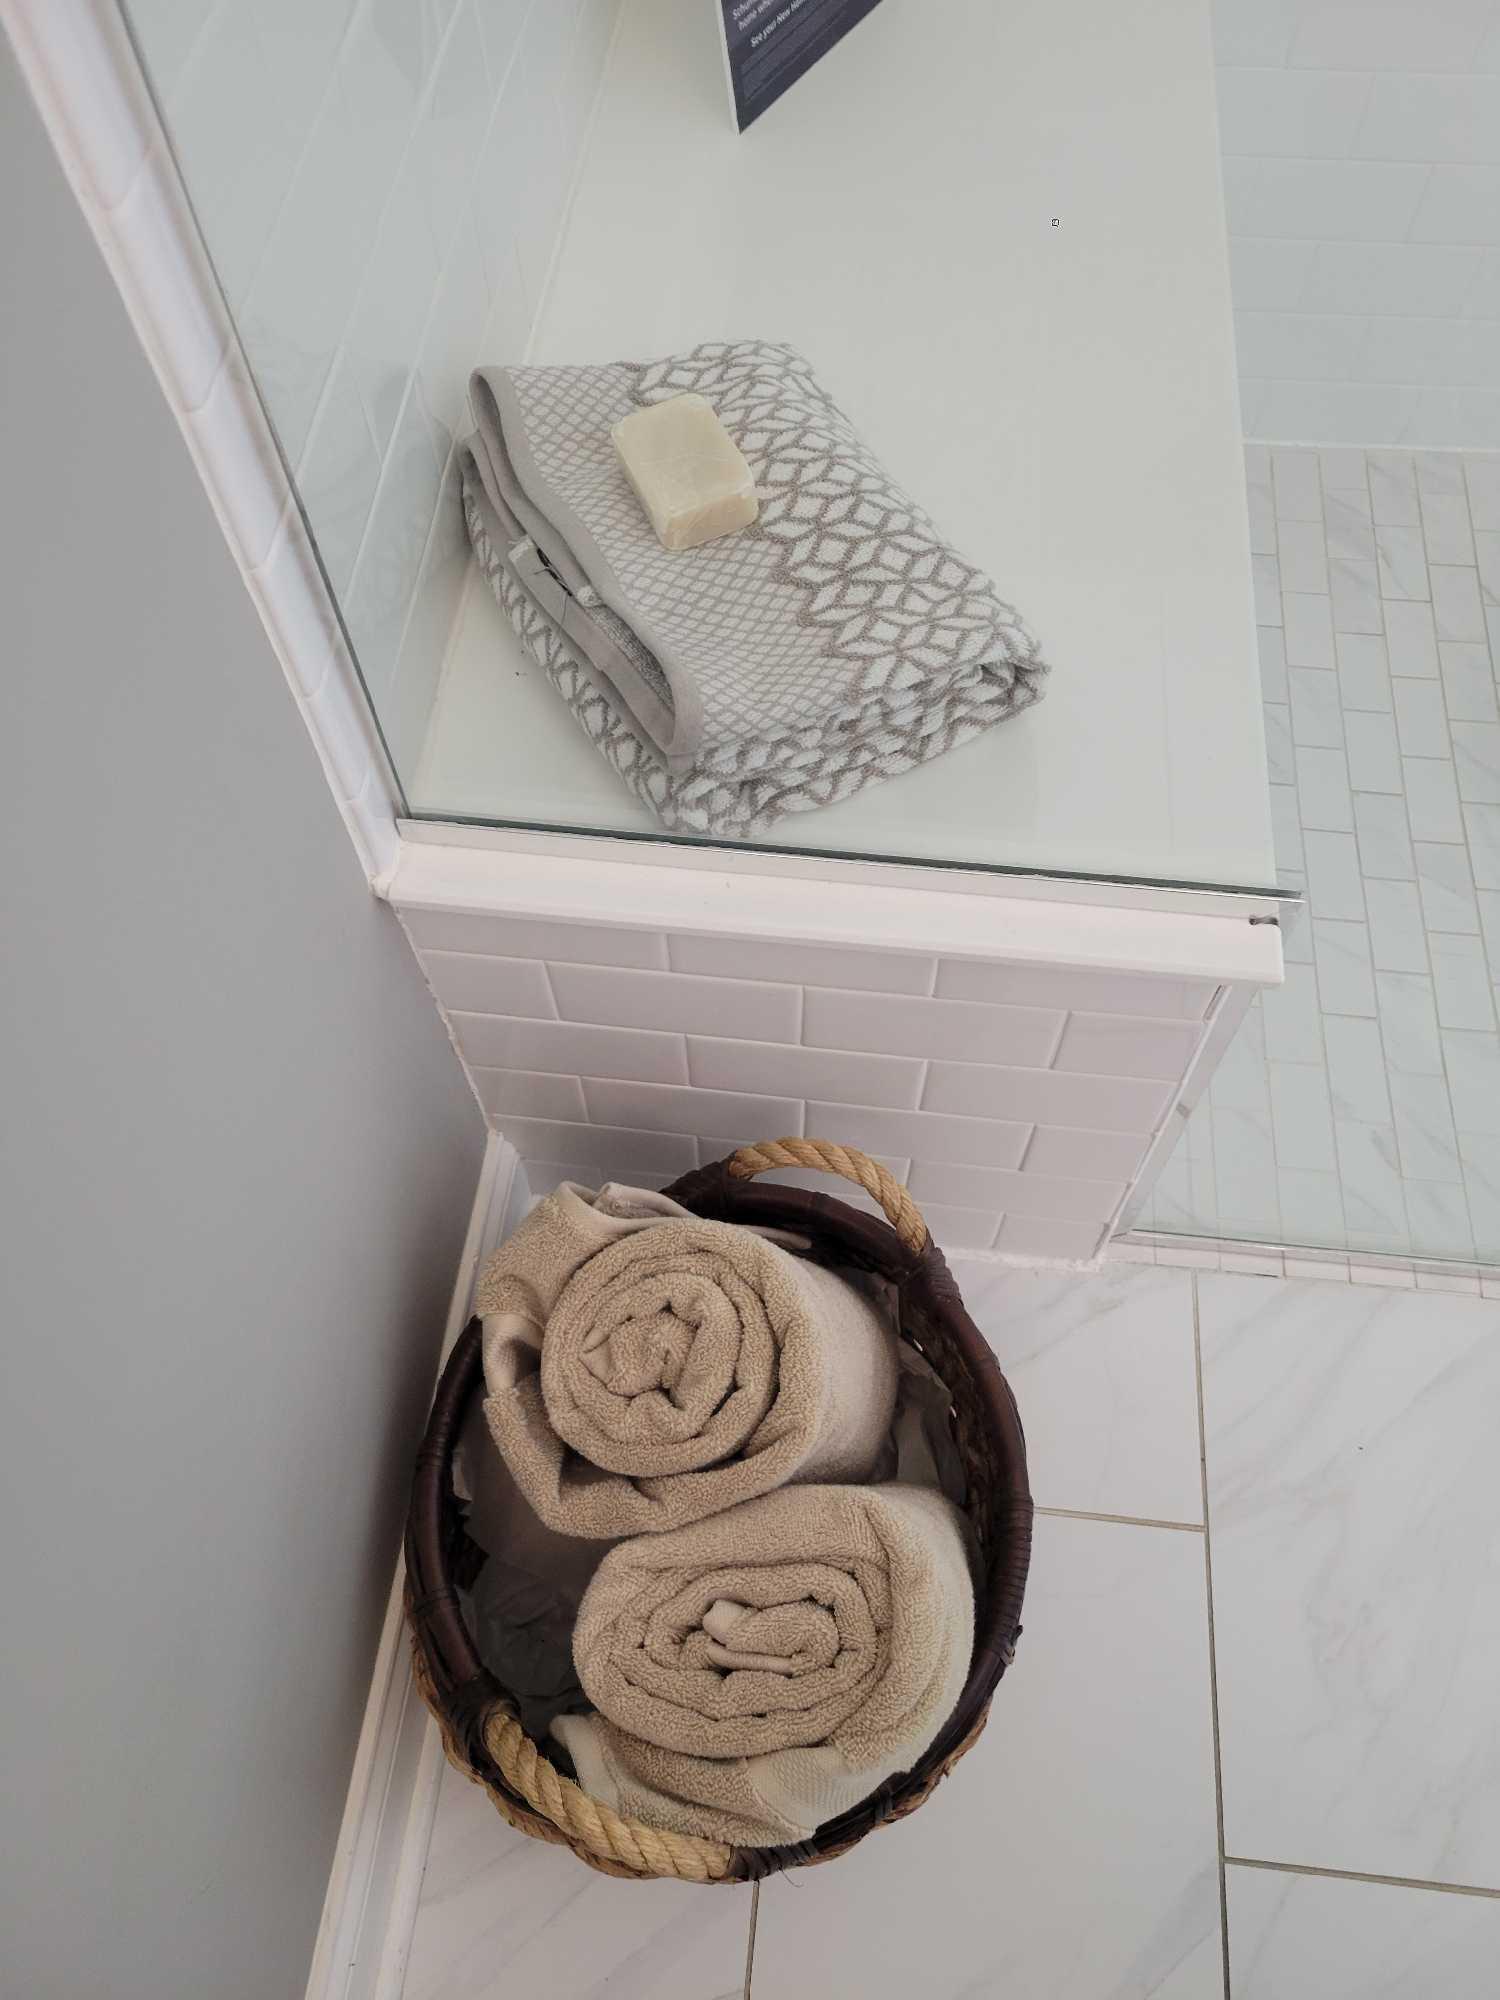 Contents of bathroon decor, rug, artificial plants, towels, basket and soap dispenser